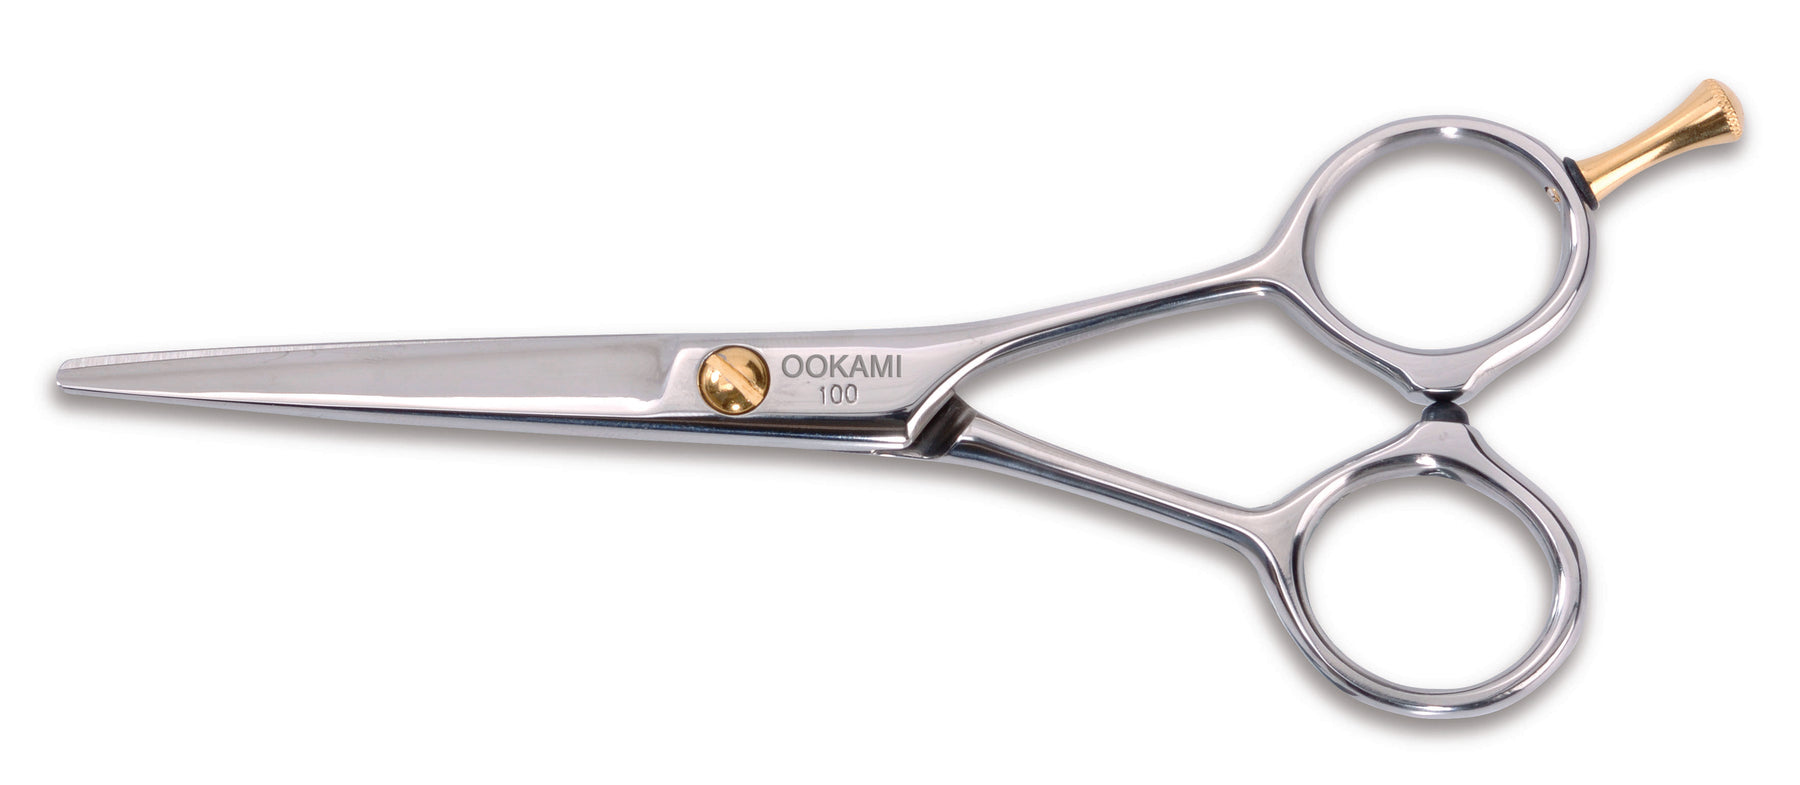 Ookami® Professional 5.5" Beauty Scissors